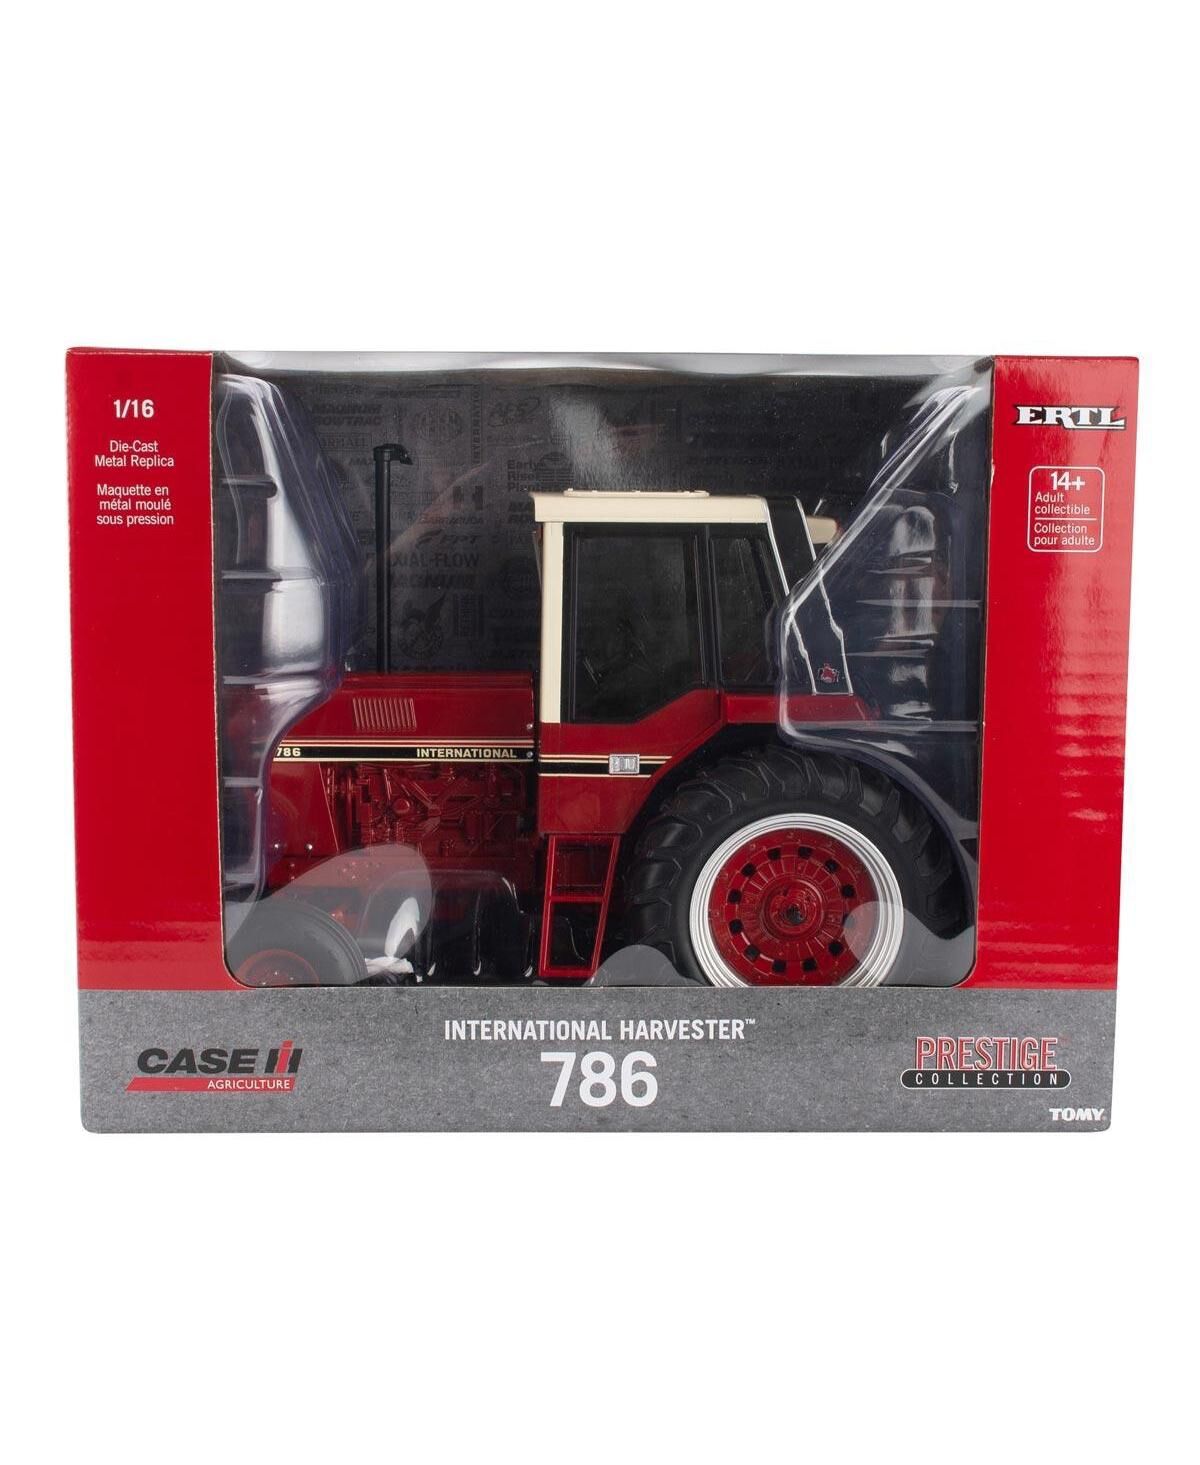 Ertl 1/16 International Harvester With Cab Prestige Collection - Red